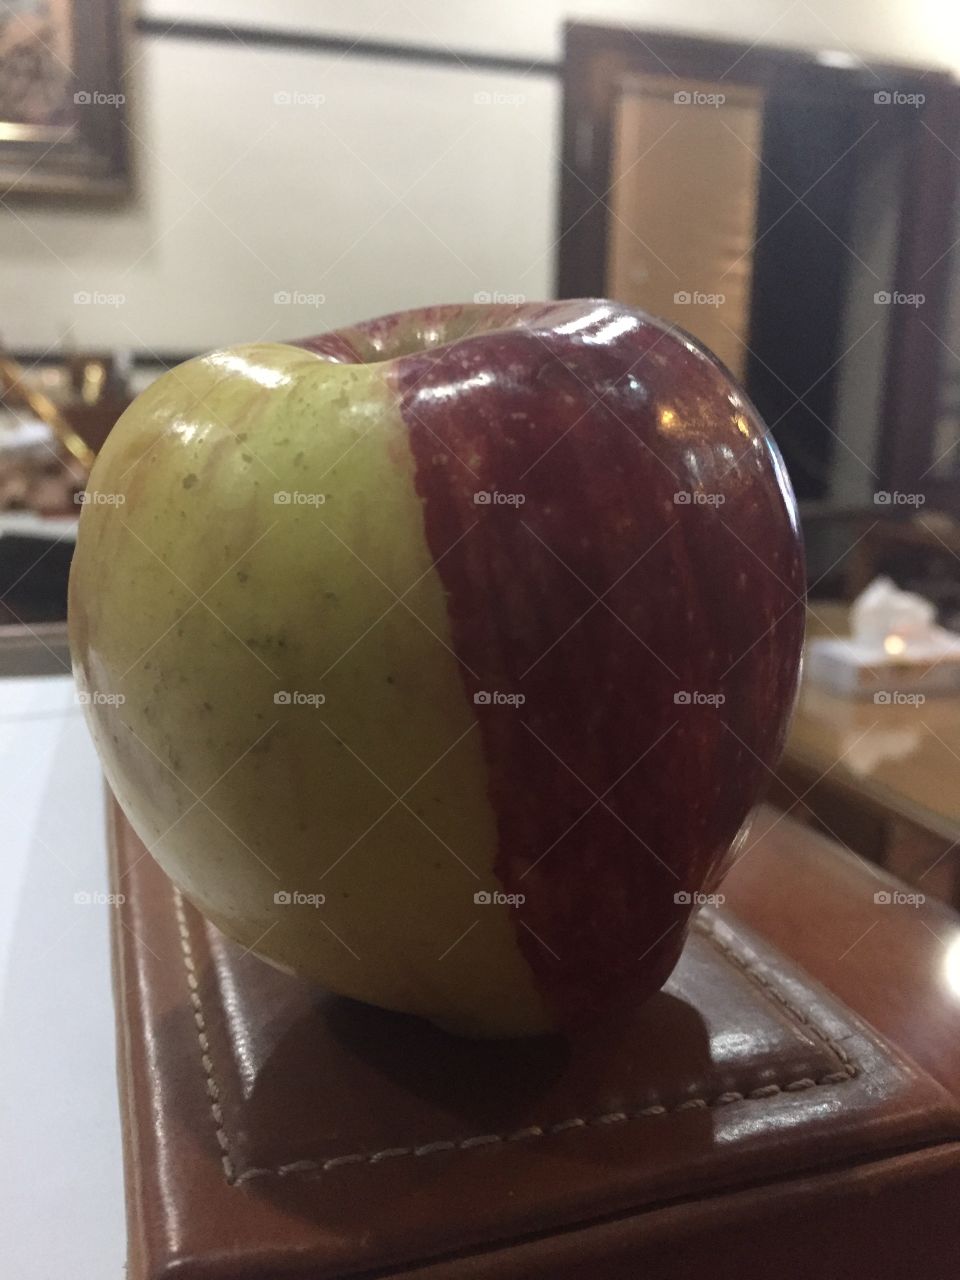 Tow color an apple